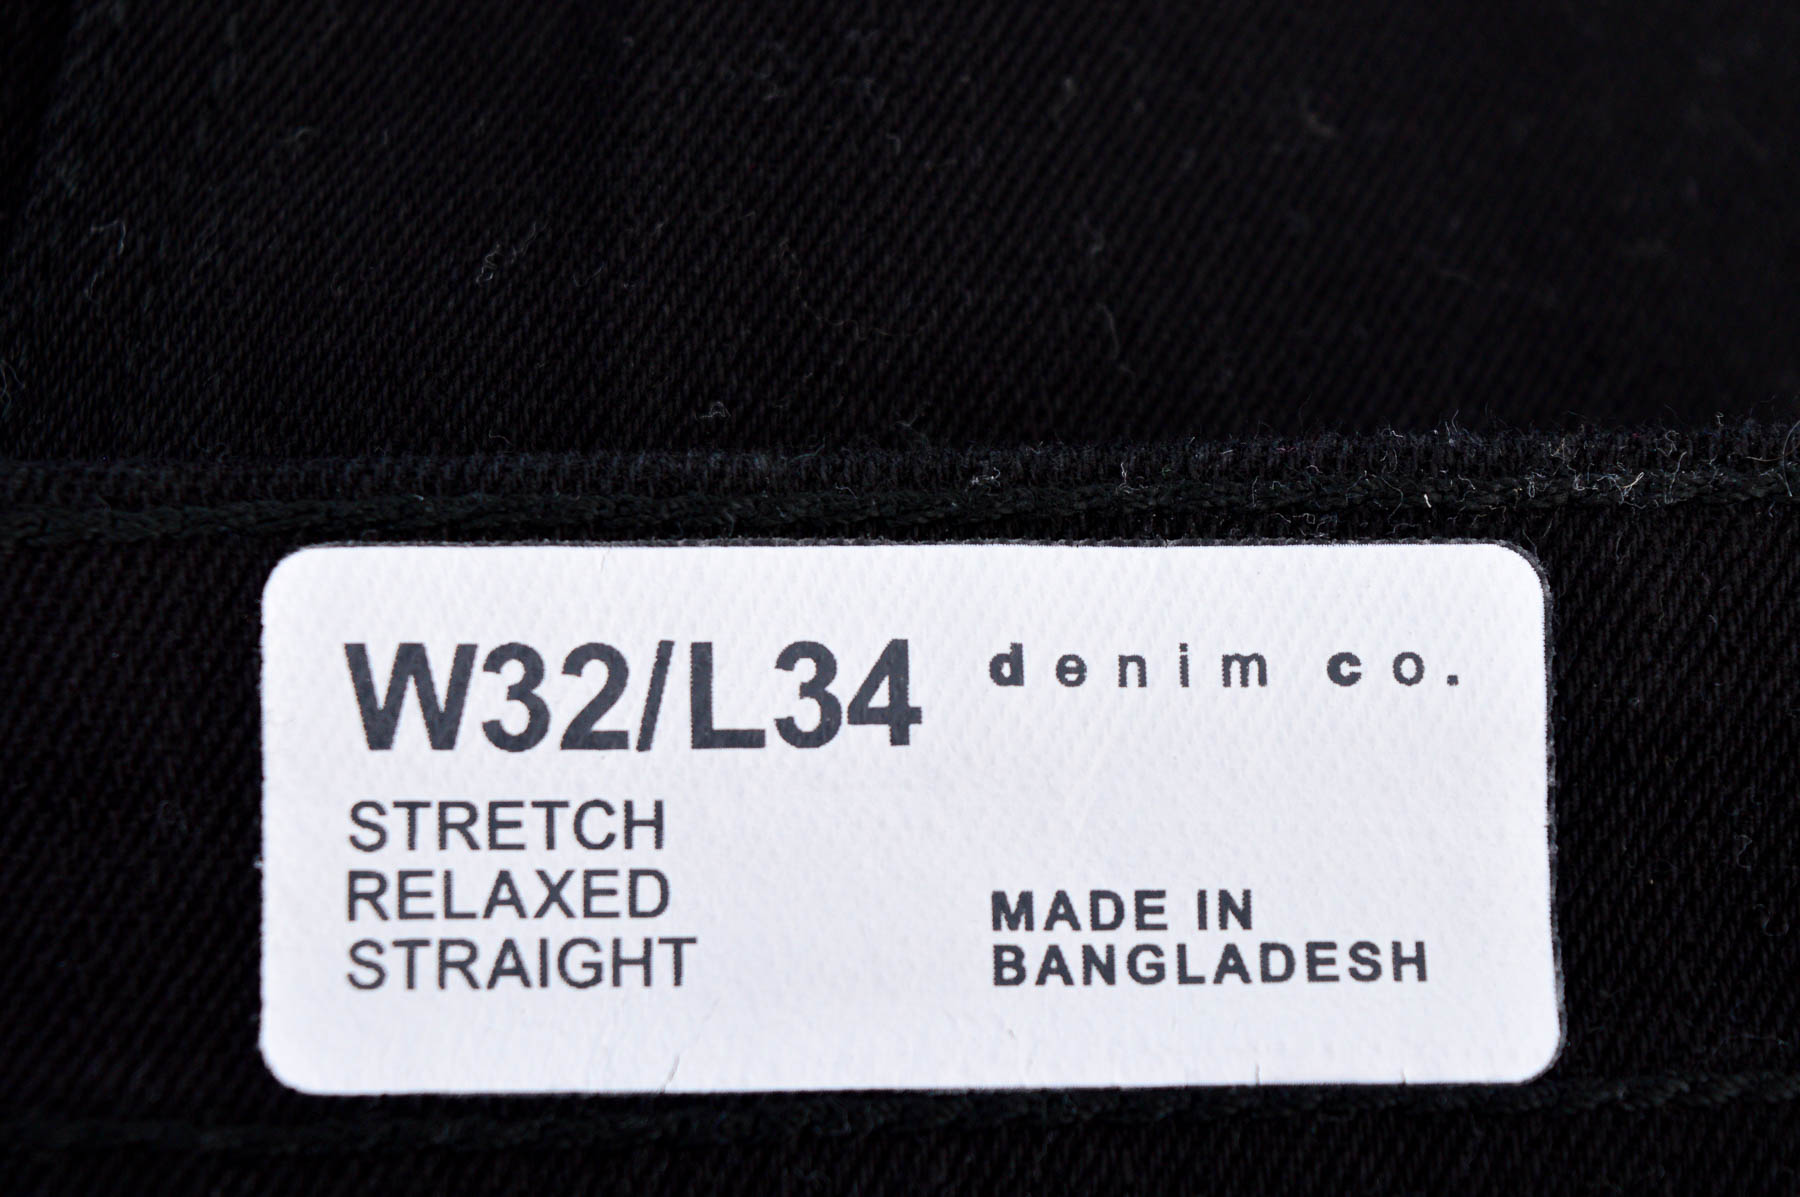 Men's jeans - Denim Co - 2